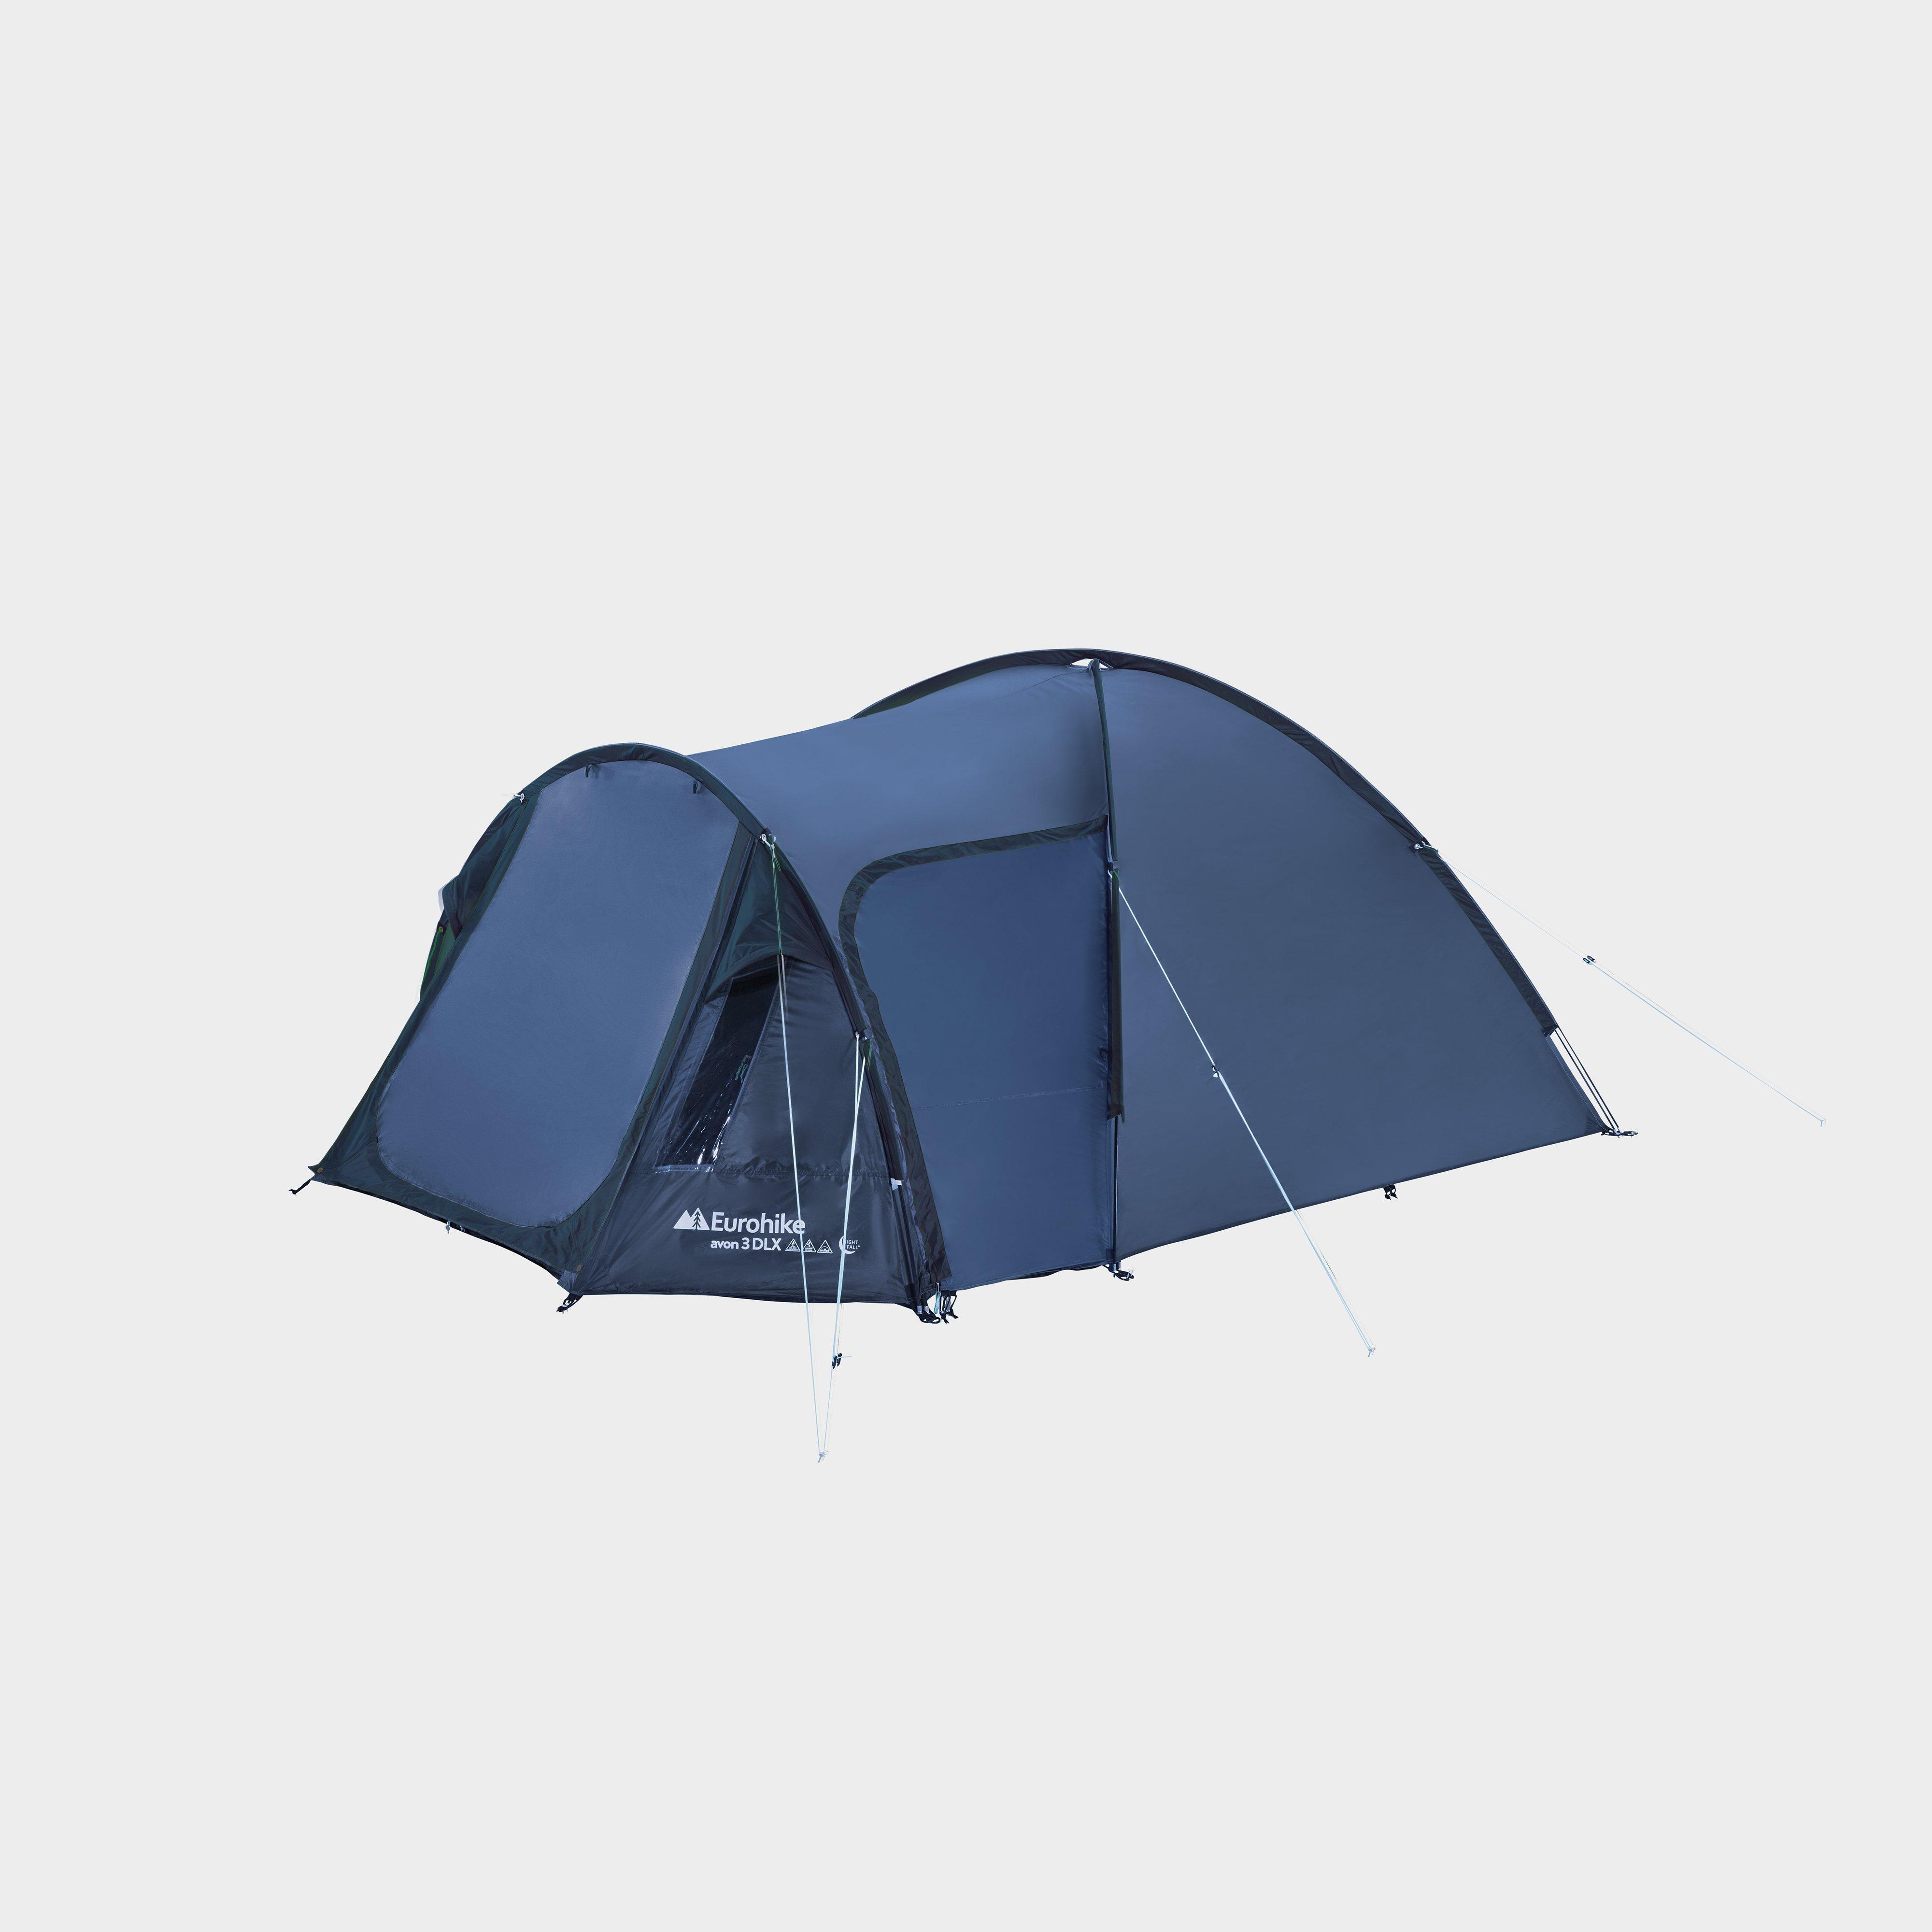  Eurohike Avon 3 DLX Nightfall Tent, Blue